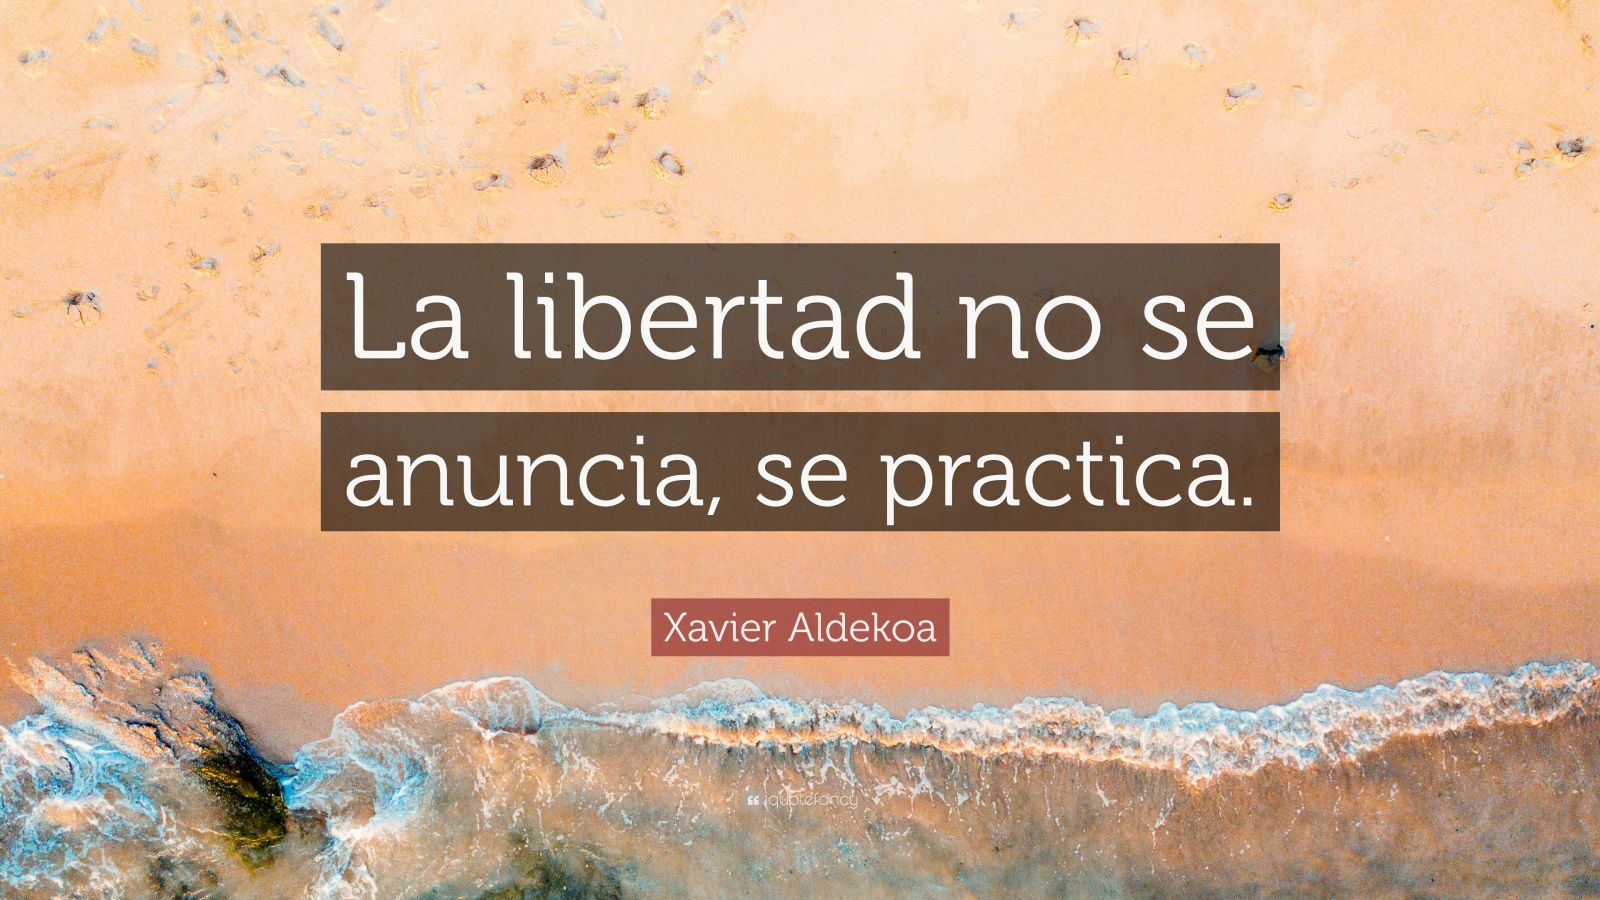 Xavier Aldekoa Quote: “La libertad no se anuncia, se practica.”